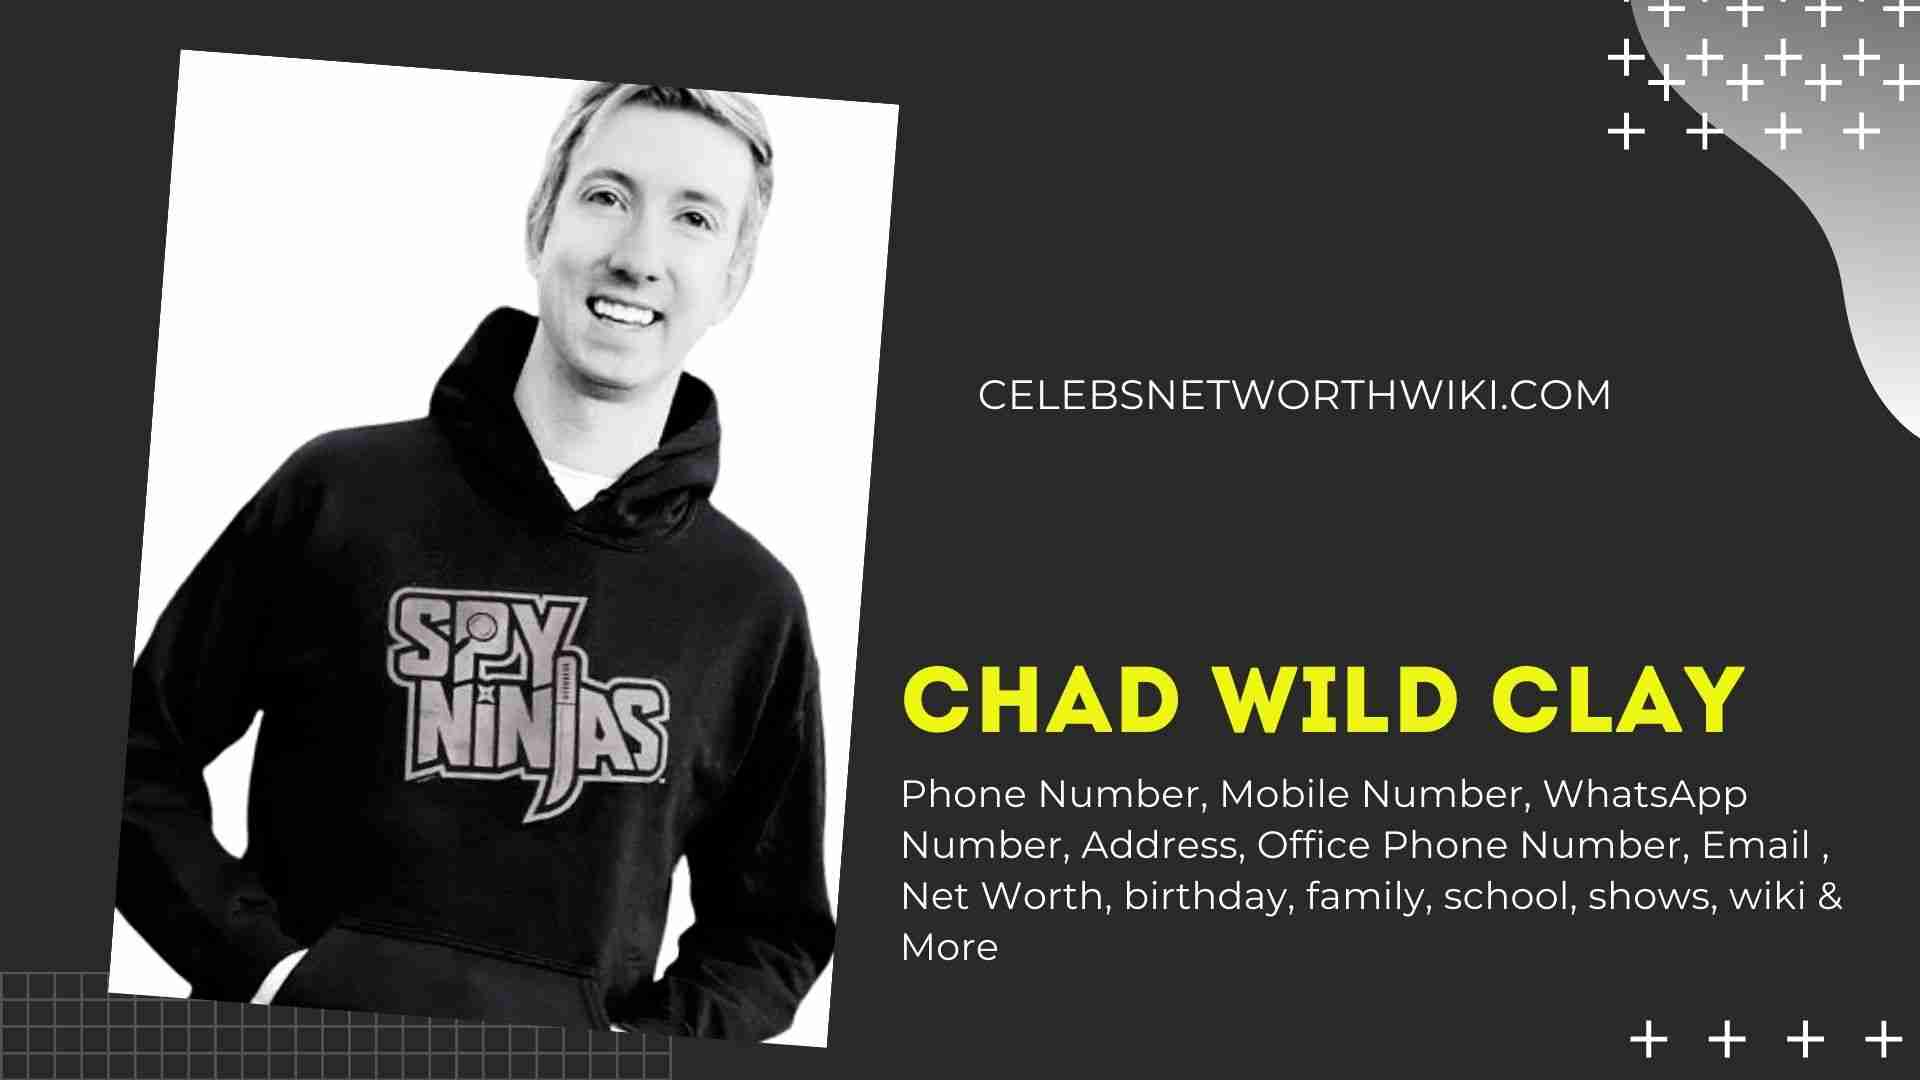 Chad wild clay